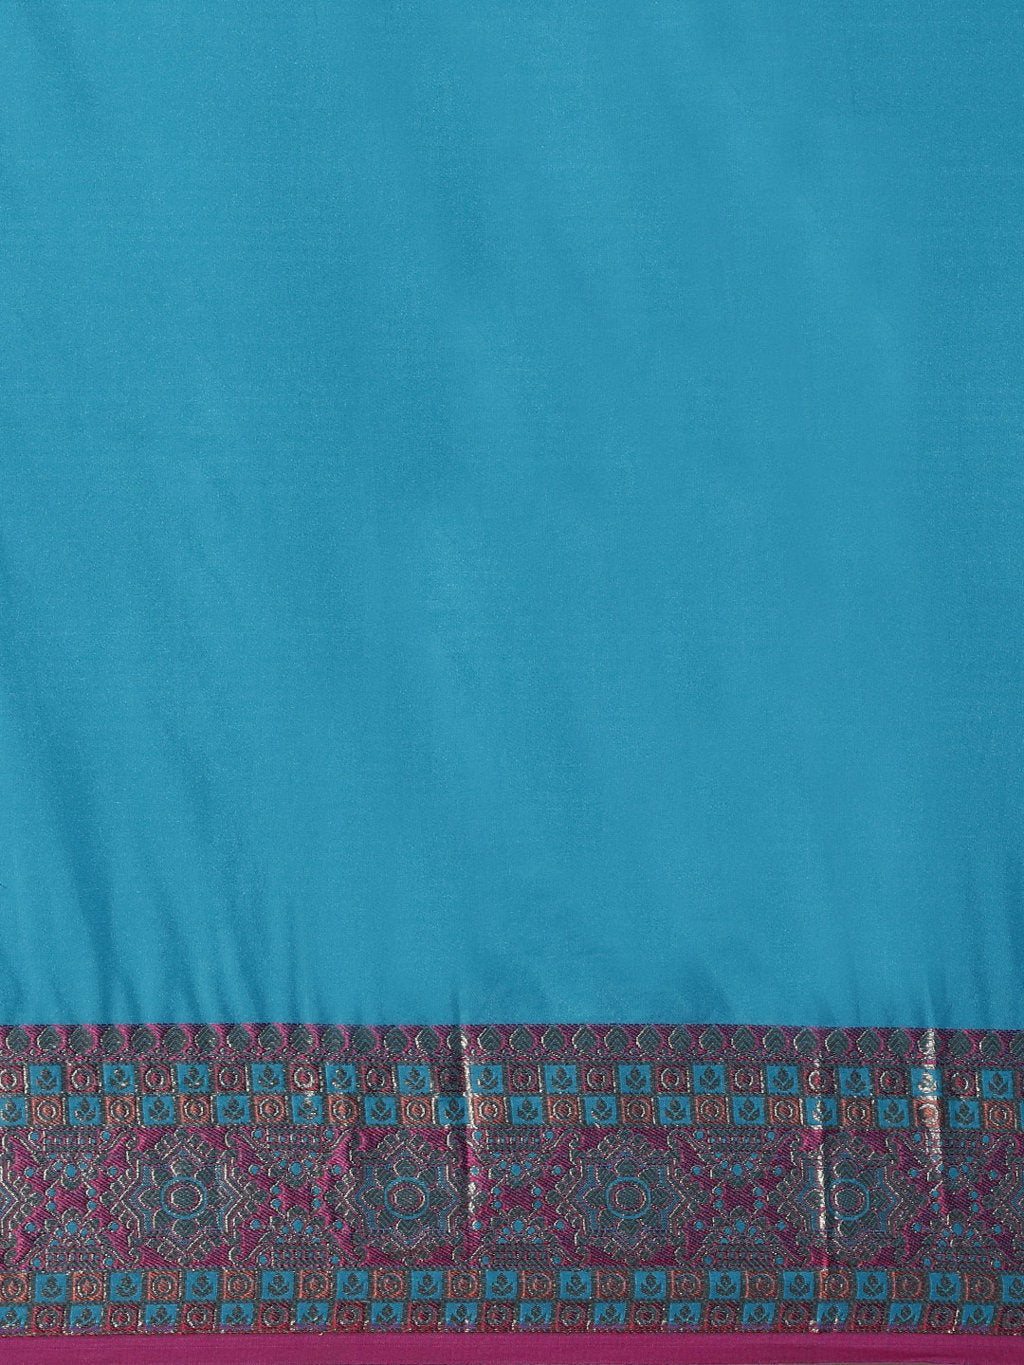 Women's Sky Blue Silk Woven Work Traditional Tassle Saree - Sangam Prints